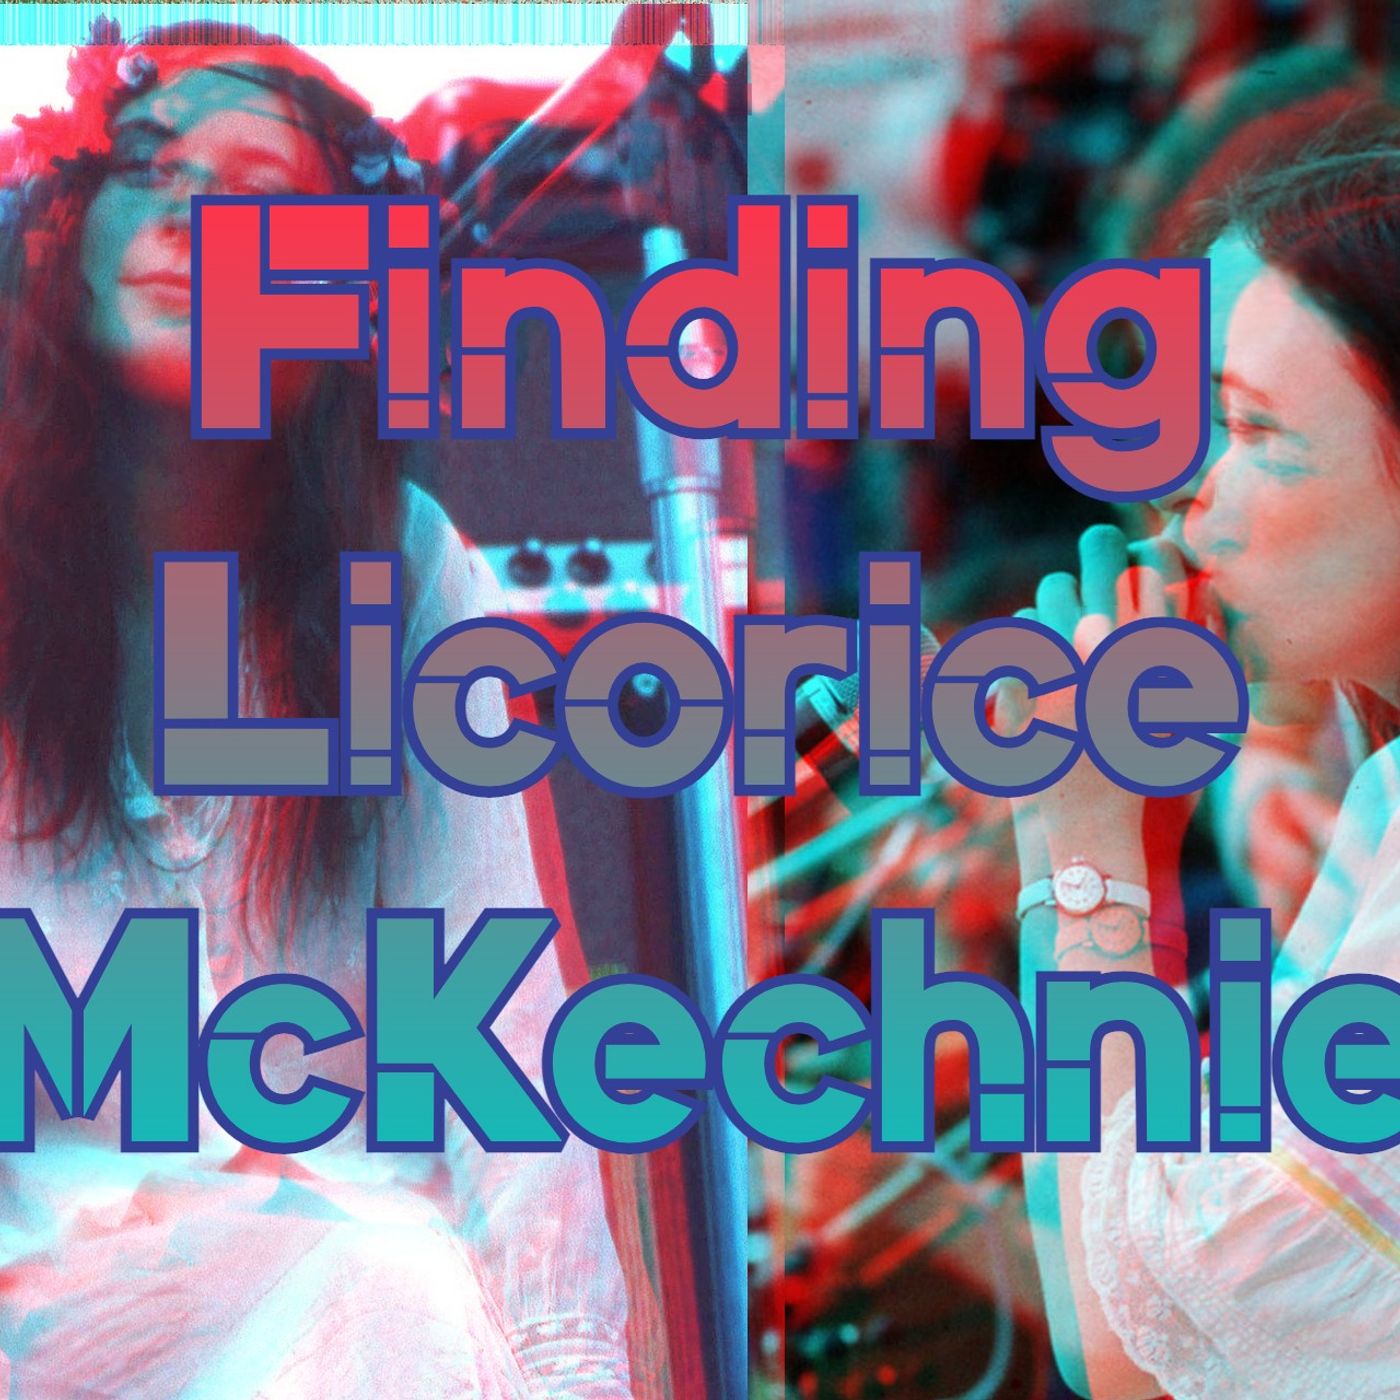 Part II: Finding Licorice McKechnie